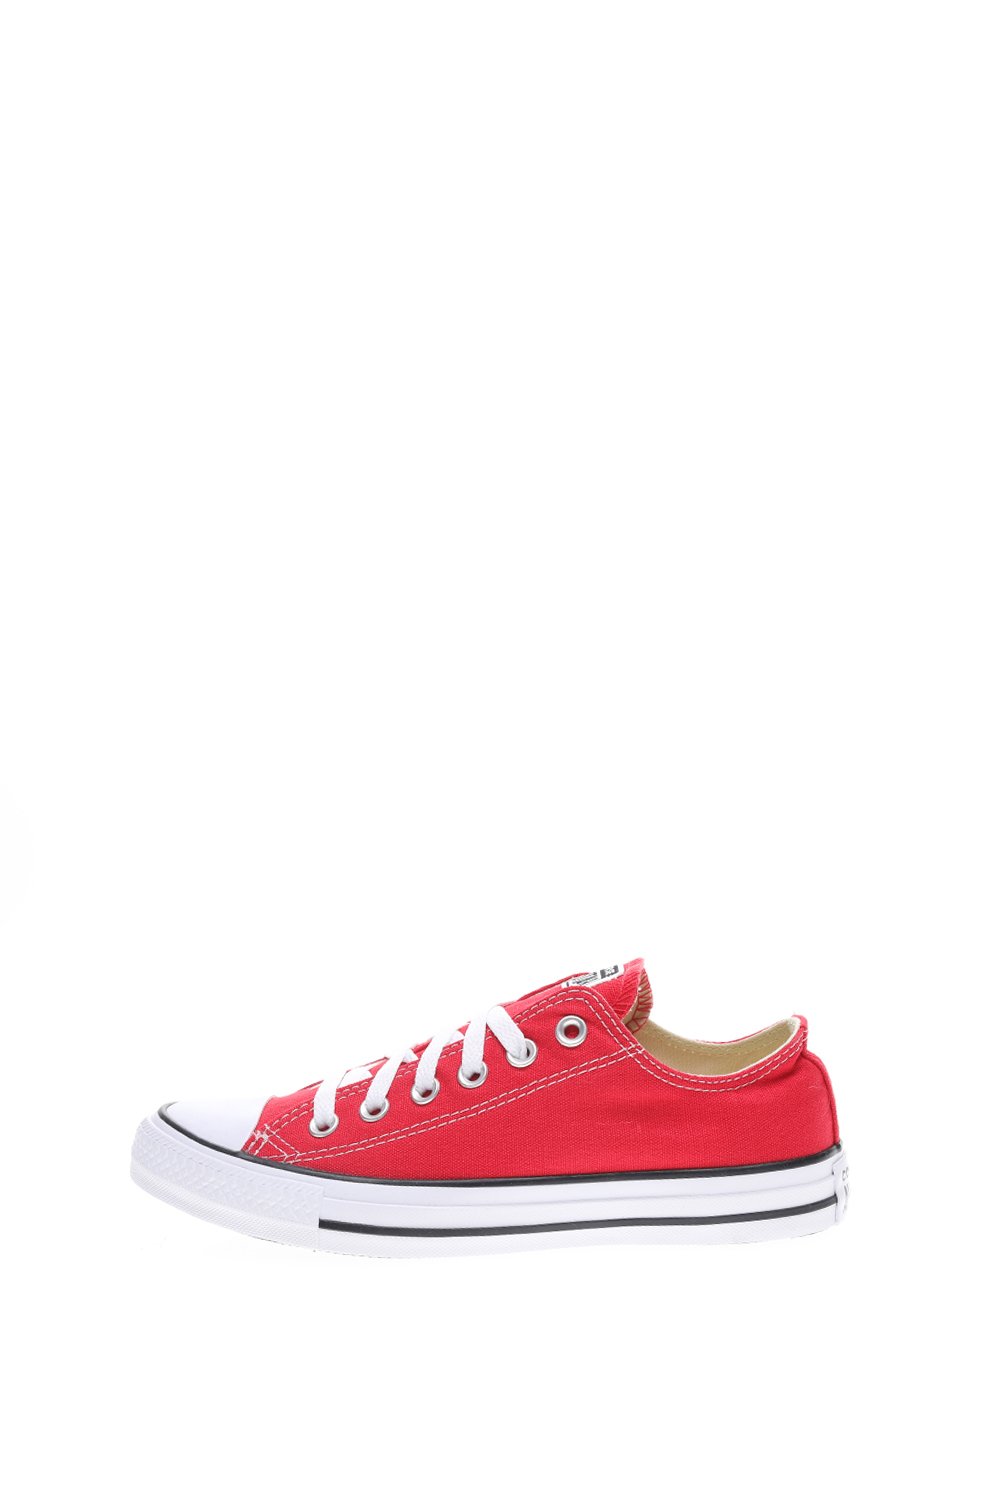 CONVERSE - Unisex Παπούτσια Chuck Taylor κόκκινα Γυναικεία/Παπούτσια/Sneakers